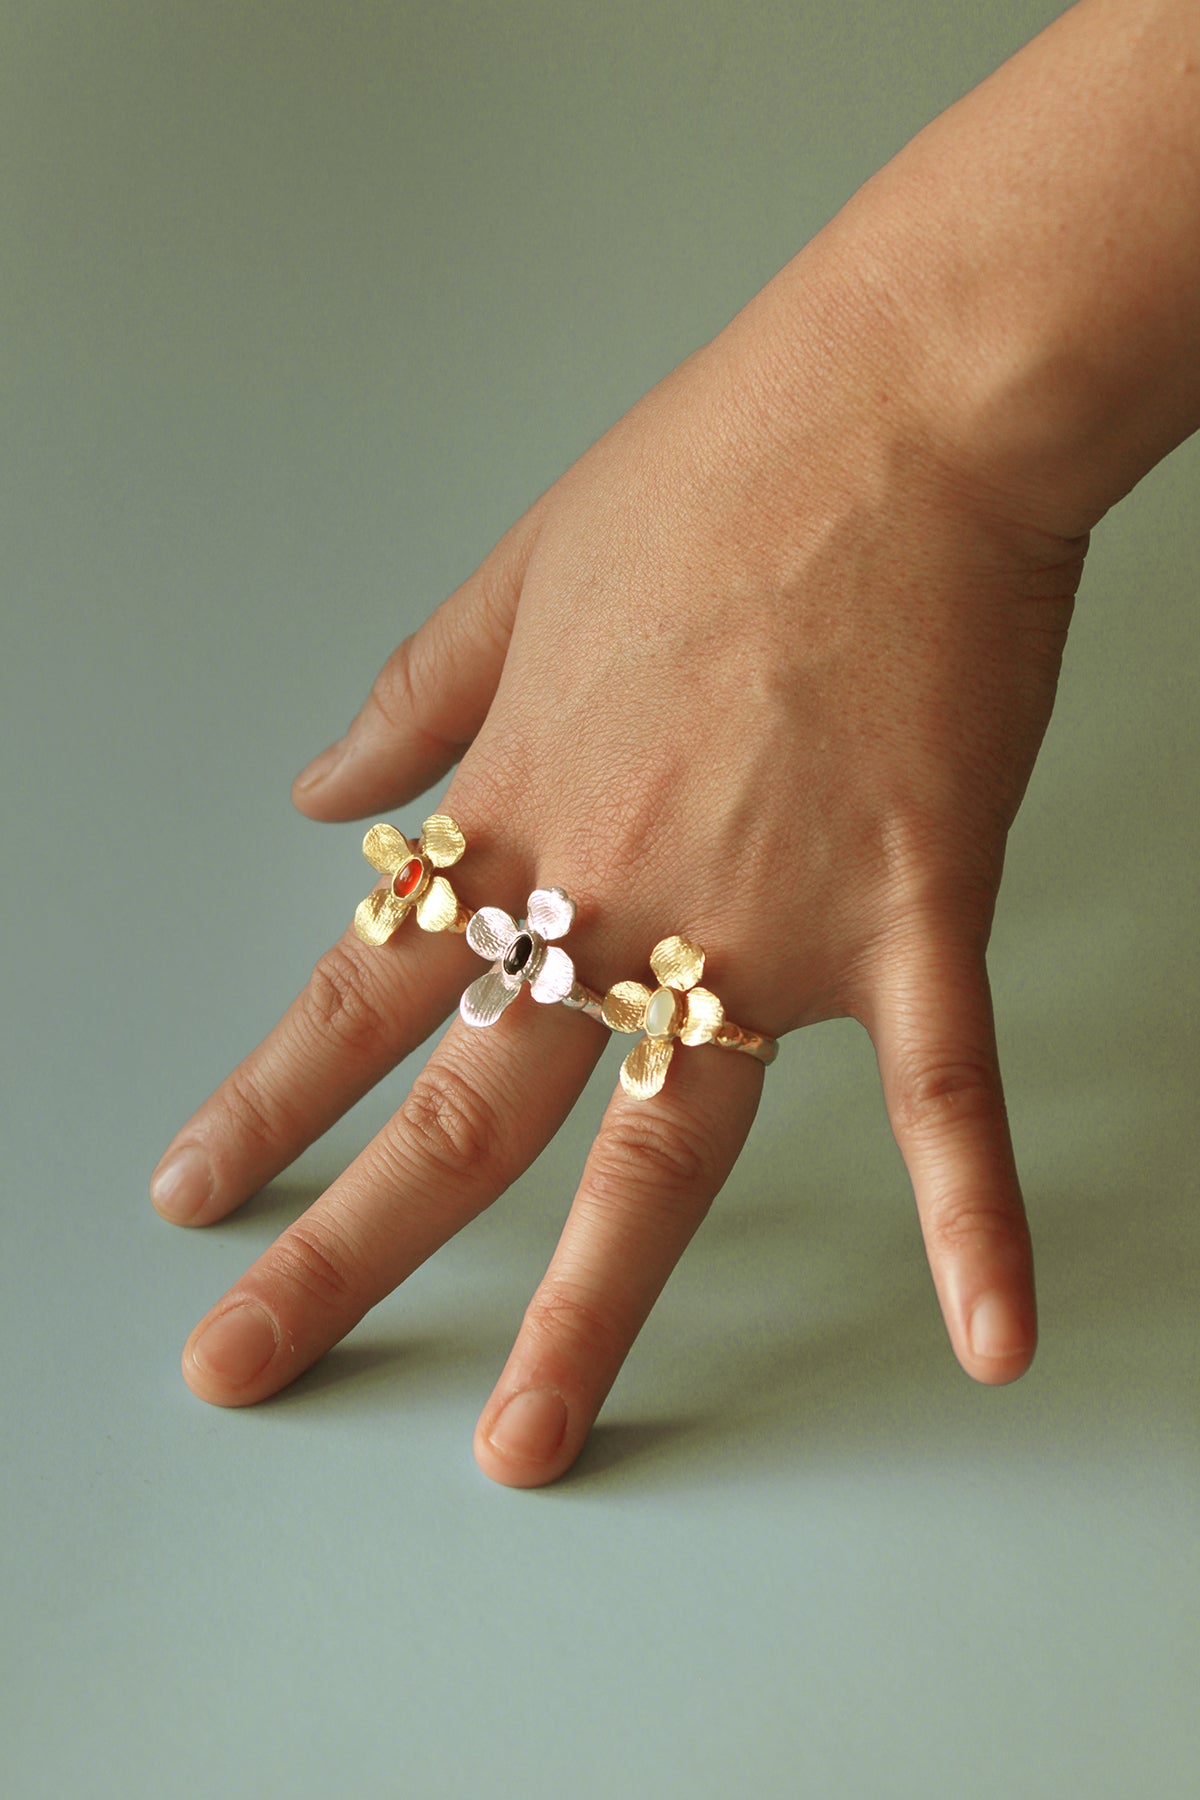 CARDAMINE // silver ring - ORA-C jewelry - handmade jewelry by Montreal based independent designer Caroline Pham